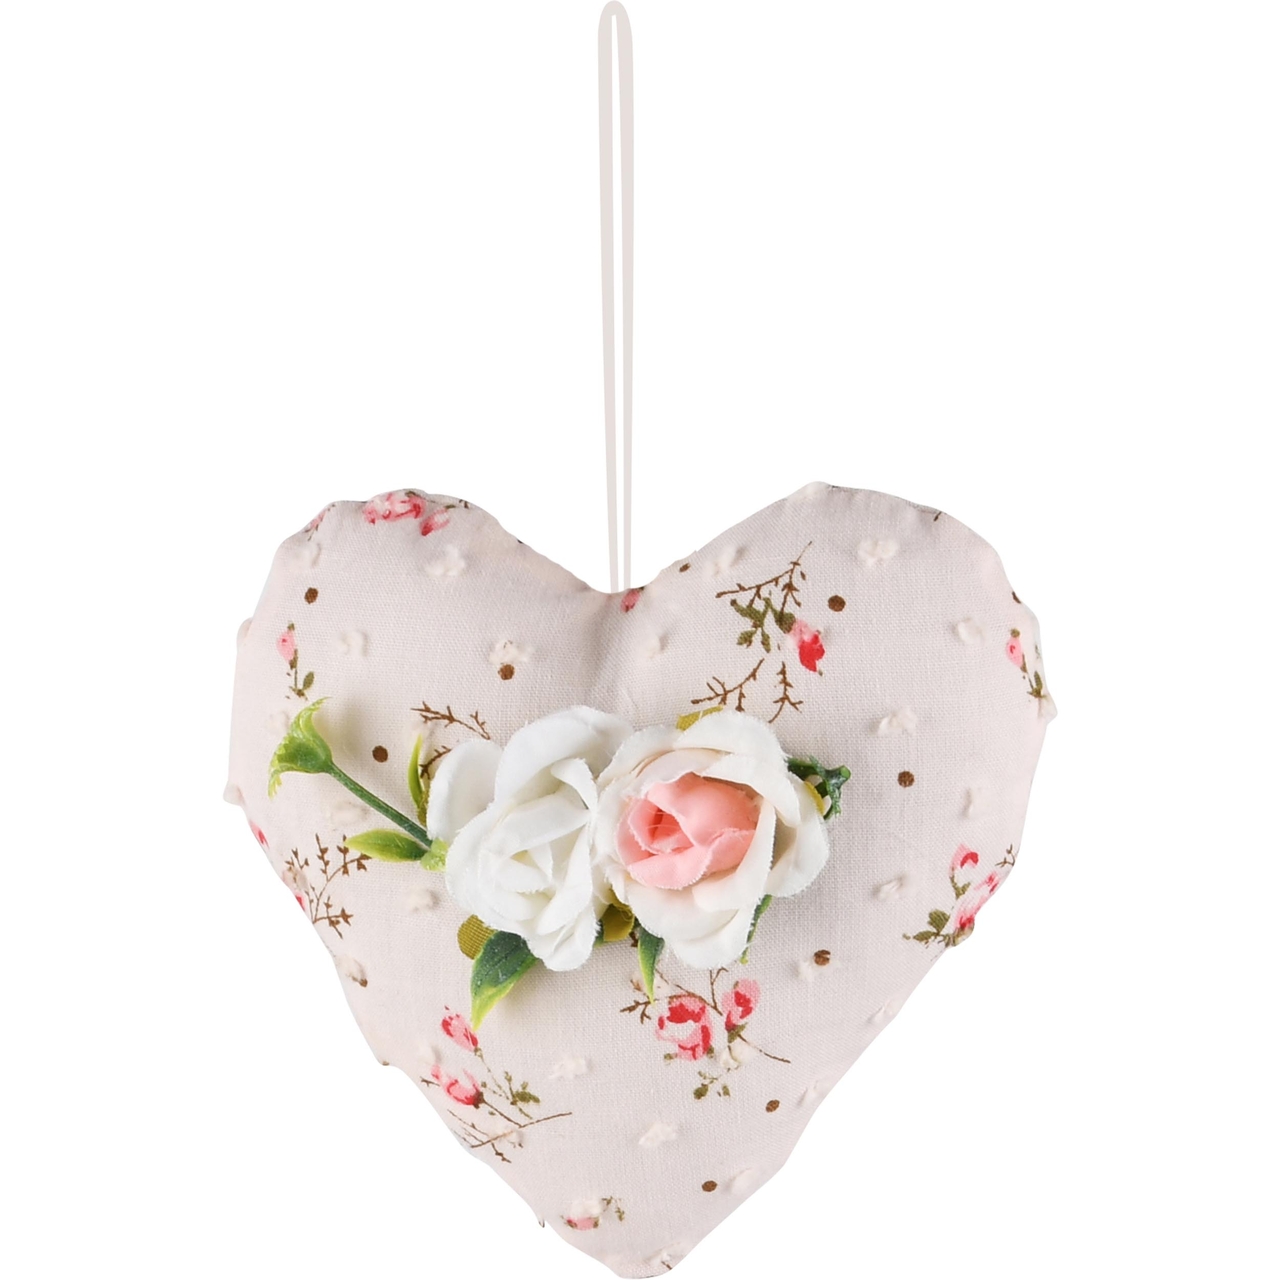 Dekoratief | Hanger hart kant m/bloem, stof, 11x5x10cm | A230656